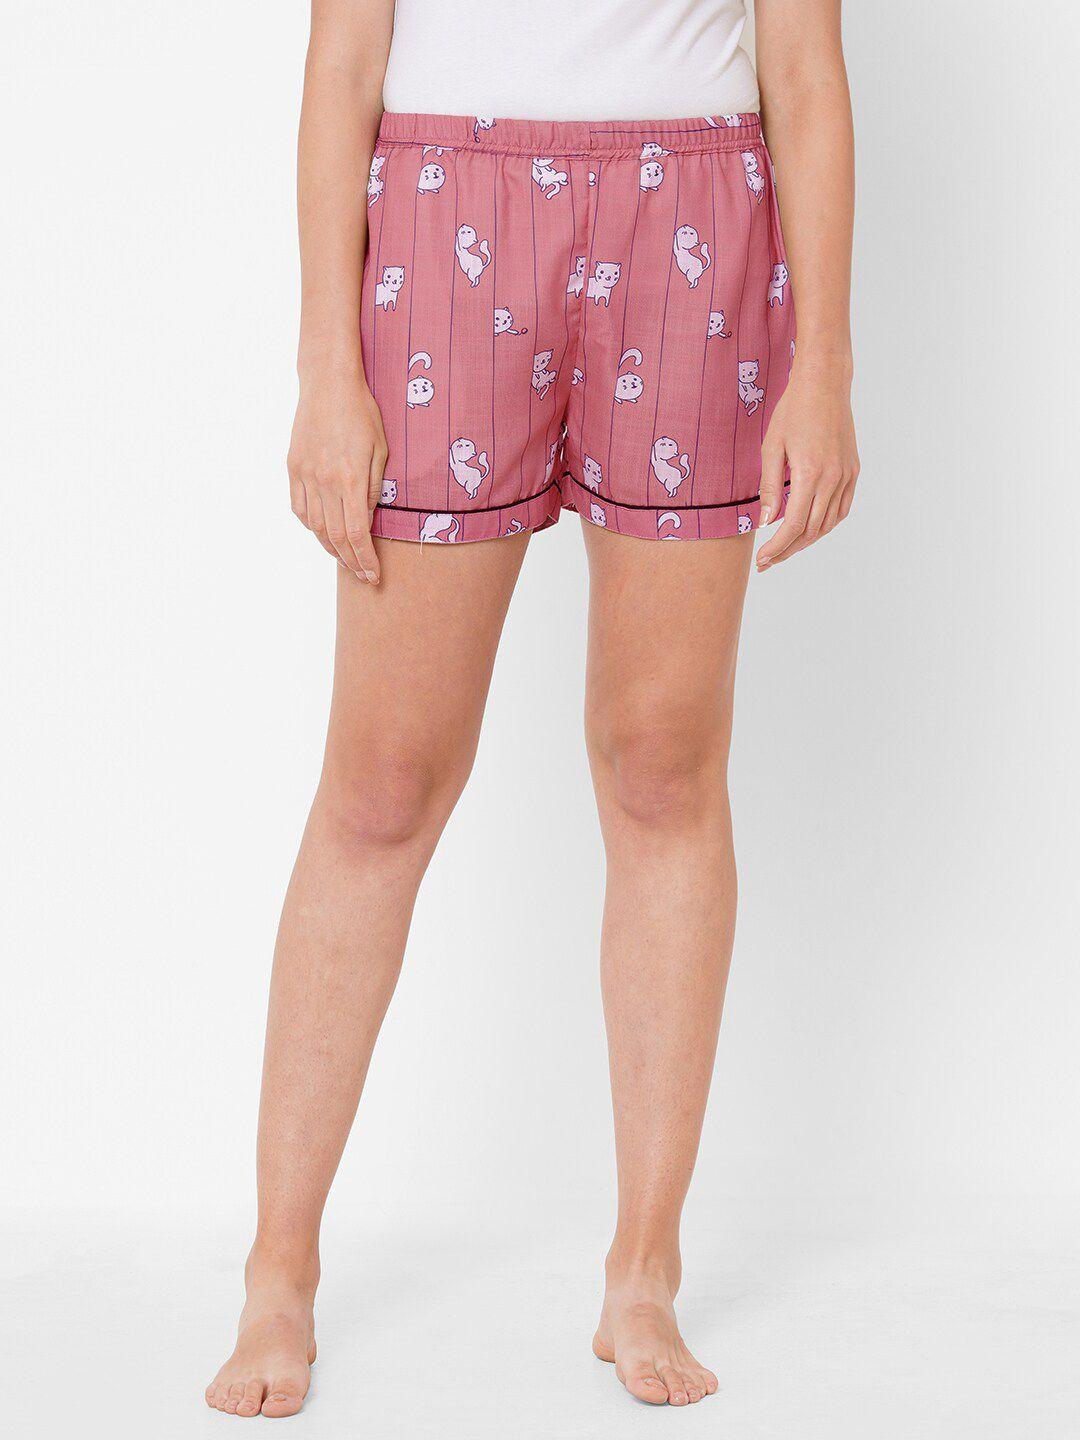 fashionrack-women-pink-&-white-cotton-printed-lounge-shorts